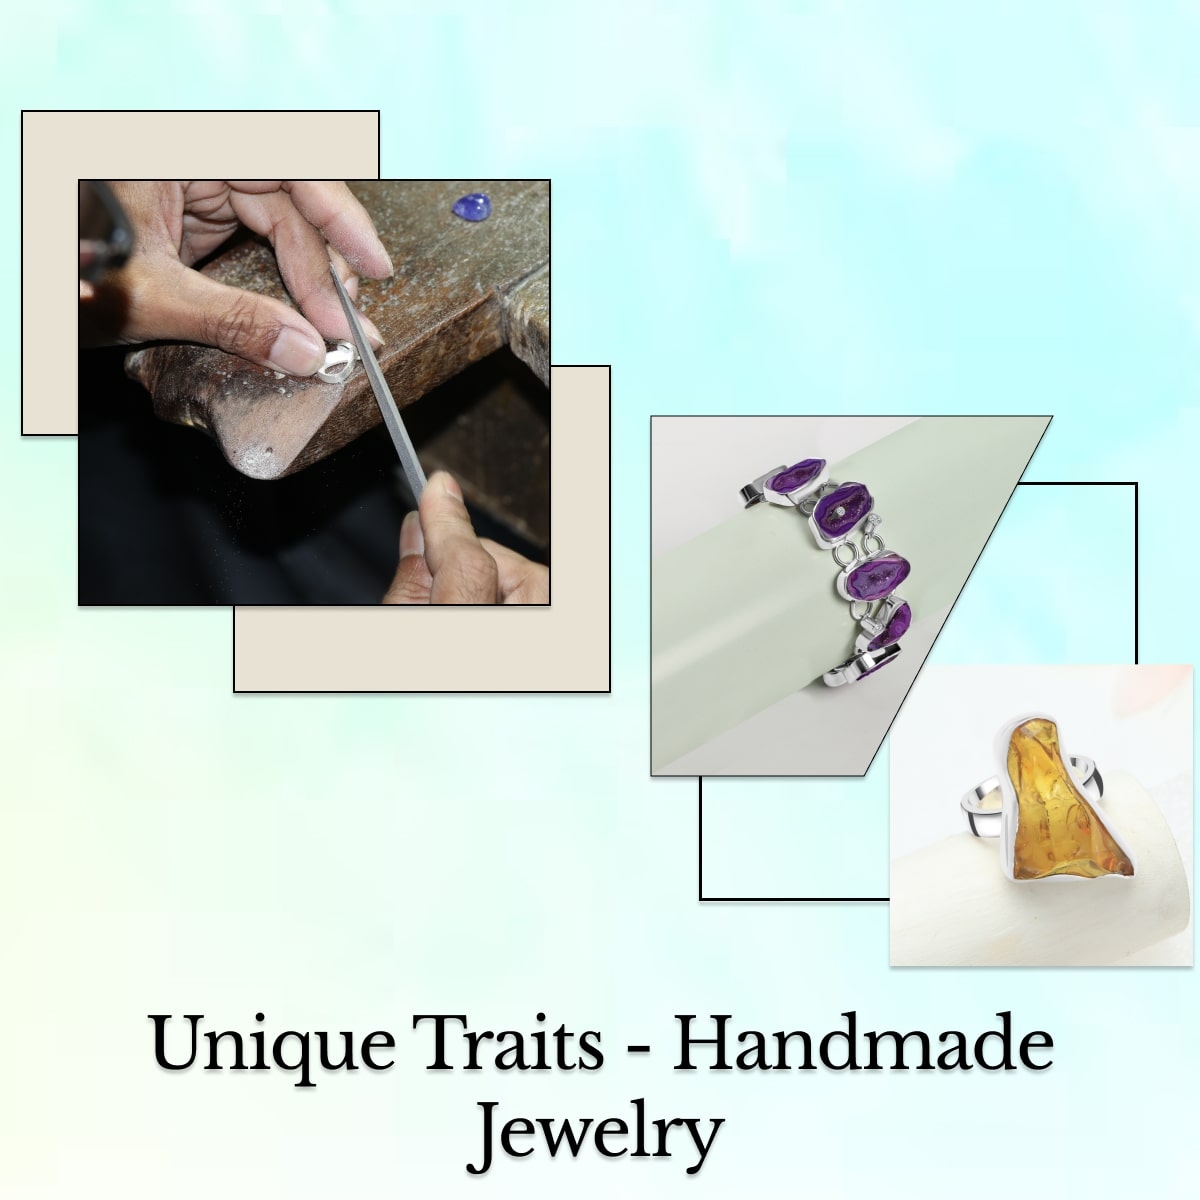 What Makes Handmade Jewelry Unique